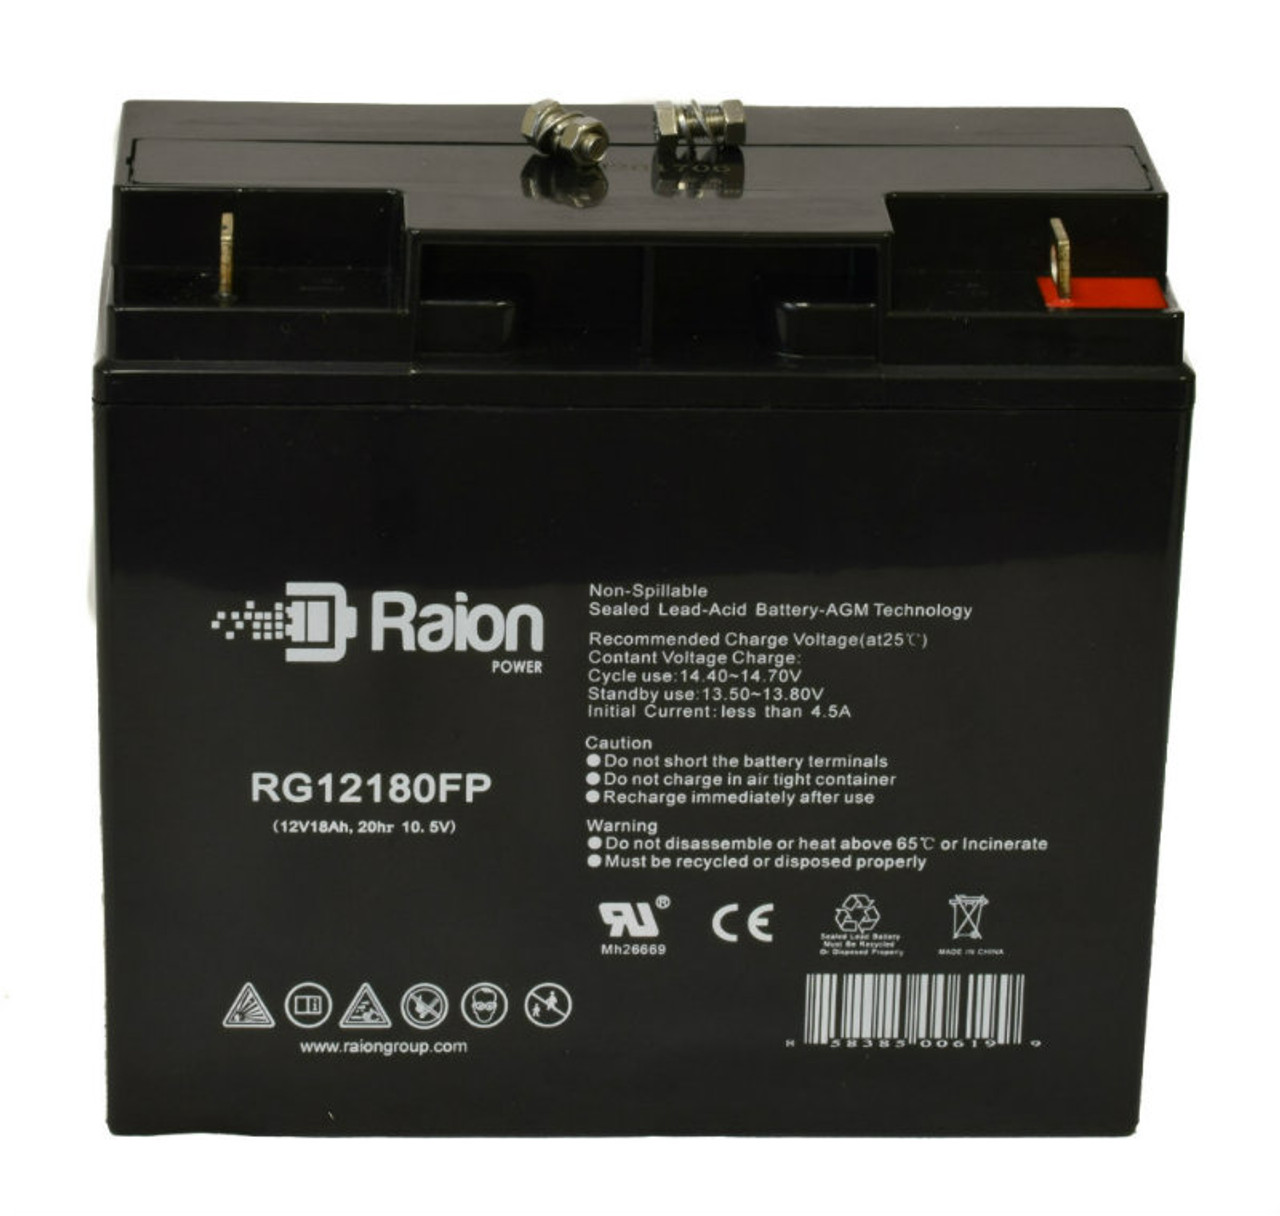 Raion Power RG12180FP 12V 18Ah Lead Acid Battery for Daymak Gatto